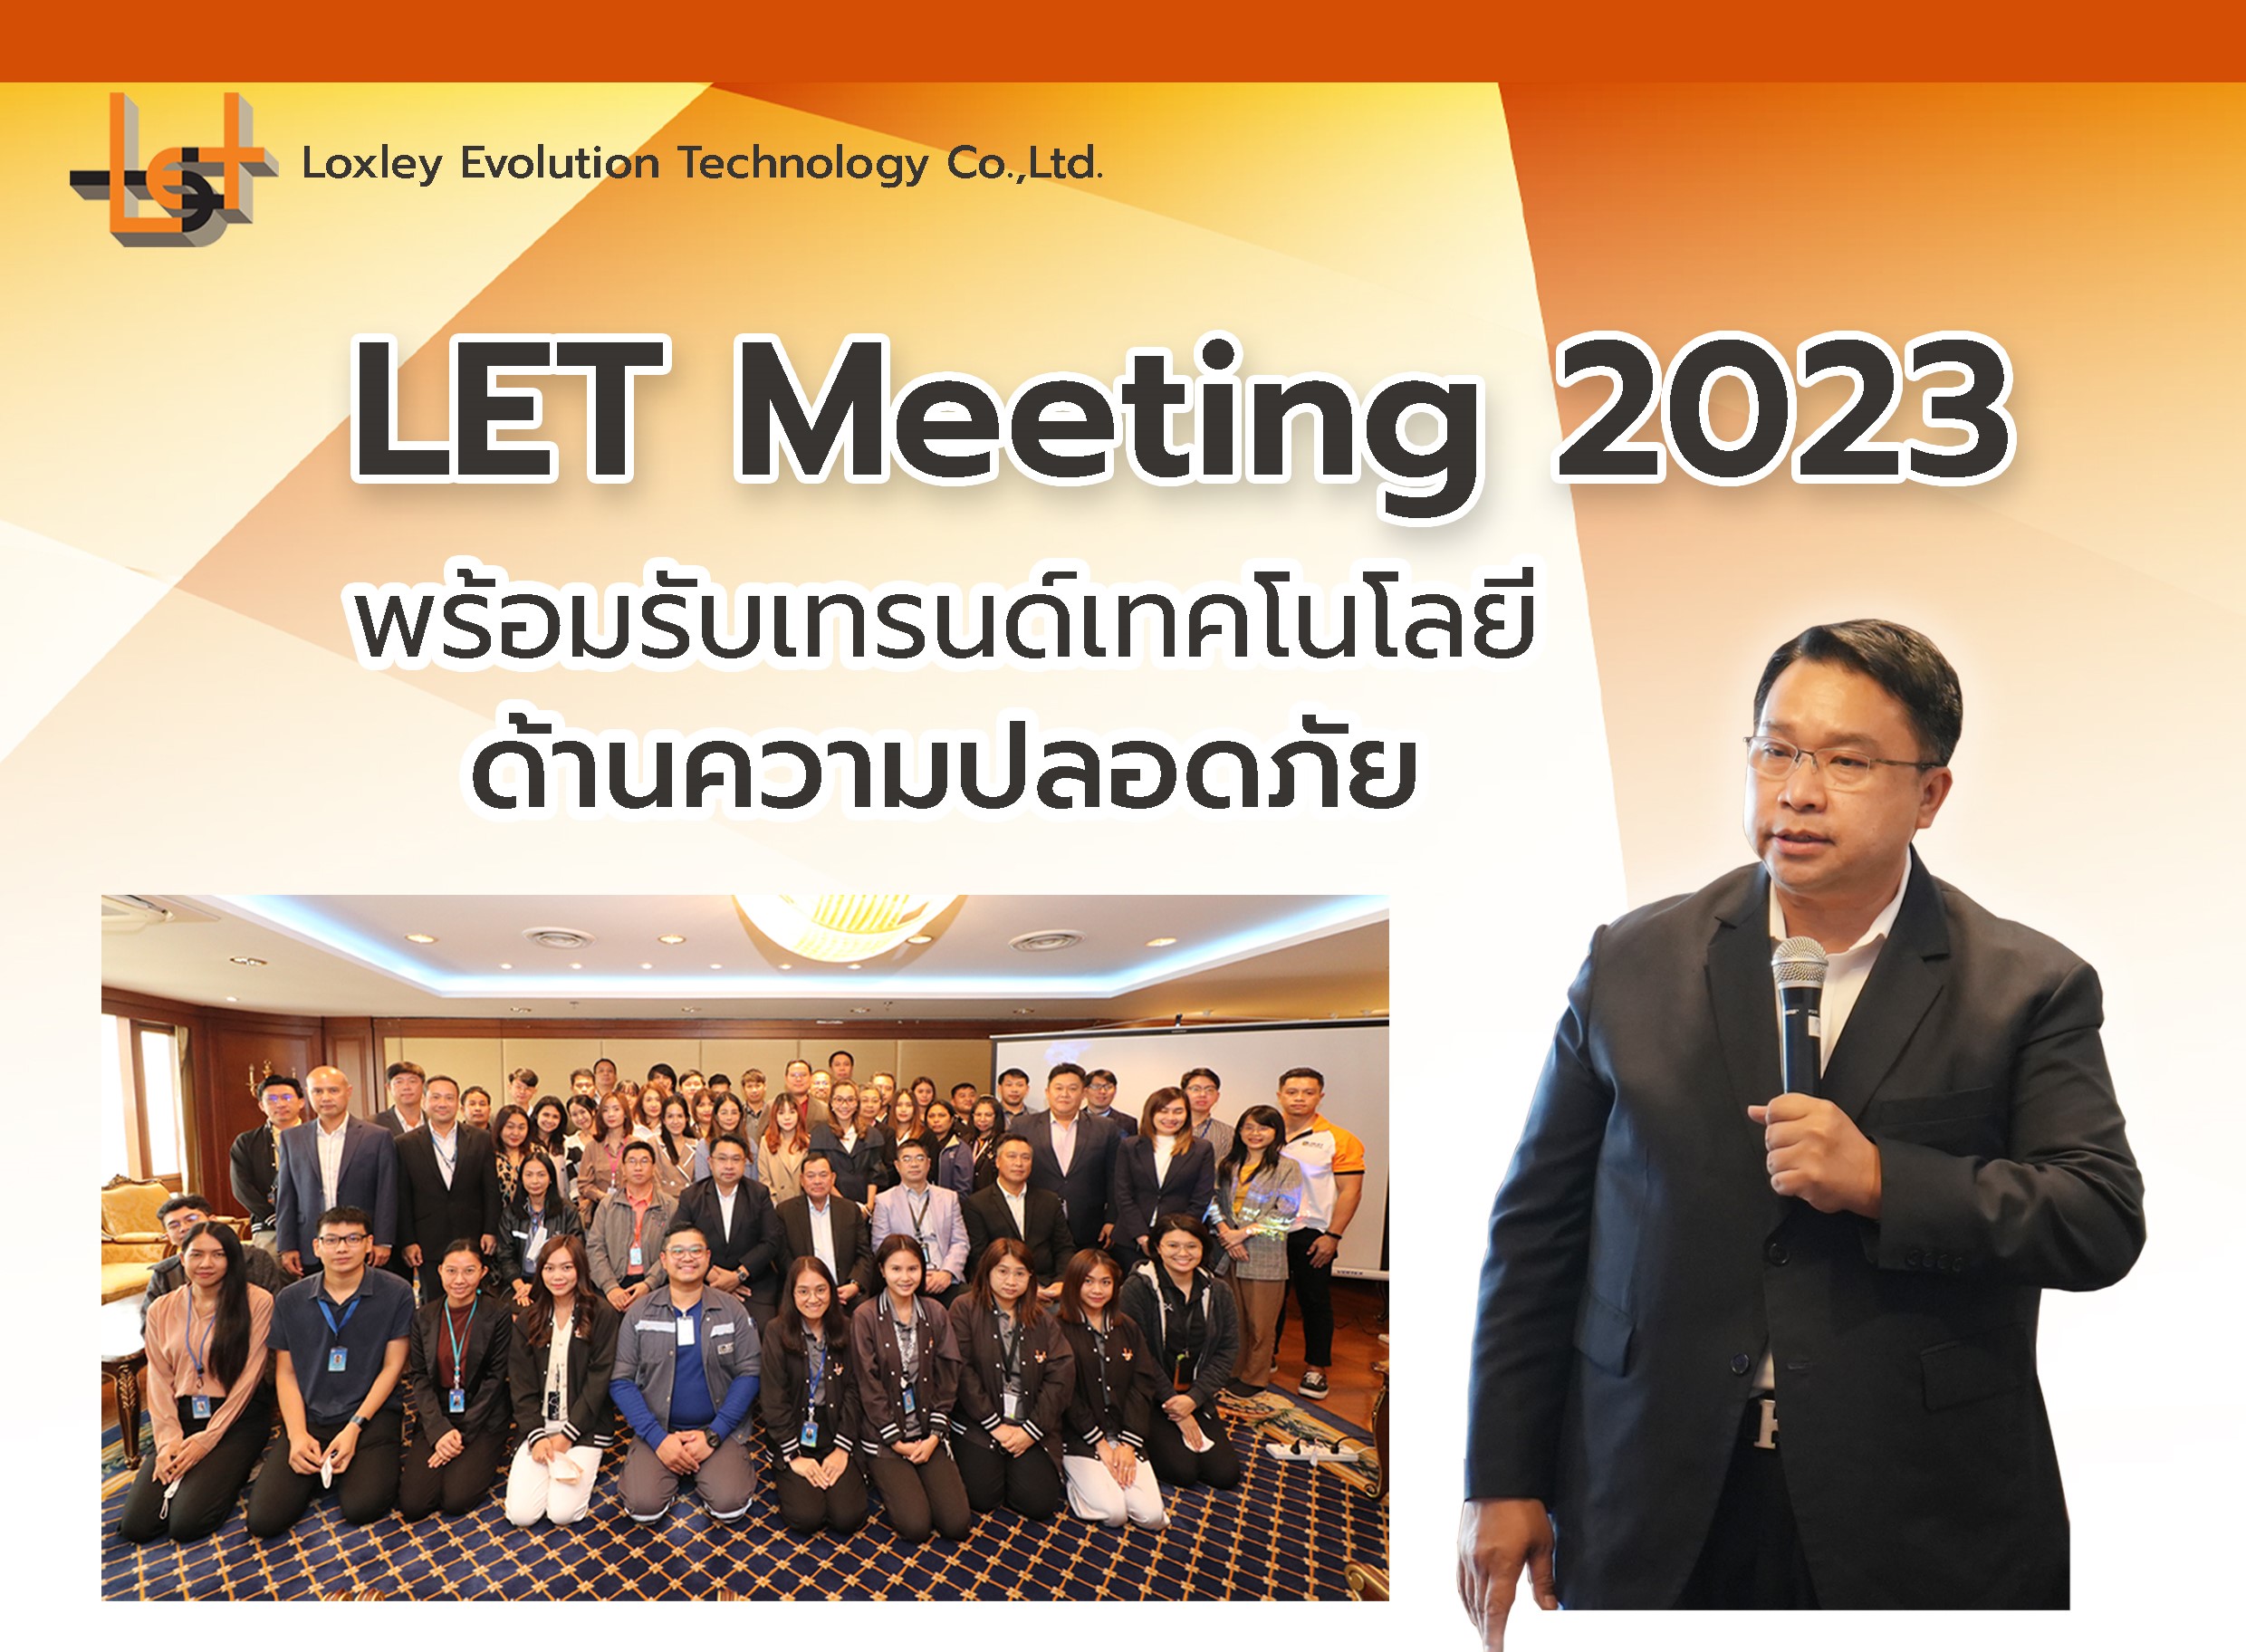 LET Meeting 2023 พร้อมรับเทรนด์เทคโนโลยี ด้านความปลอดภัย